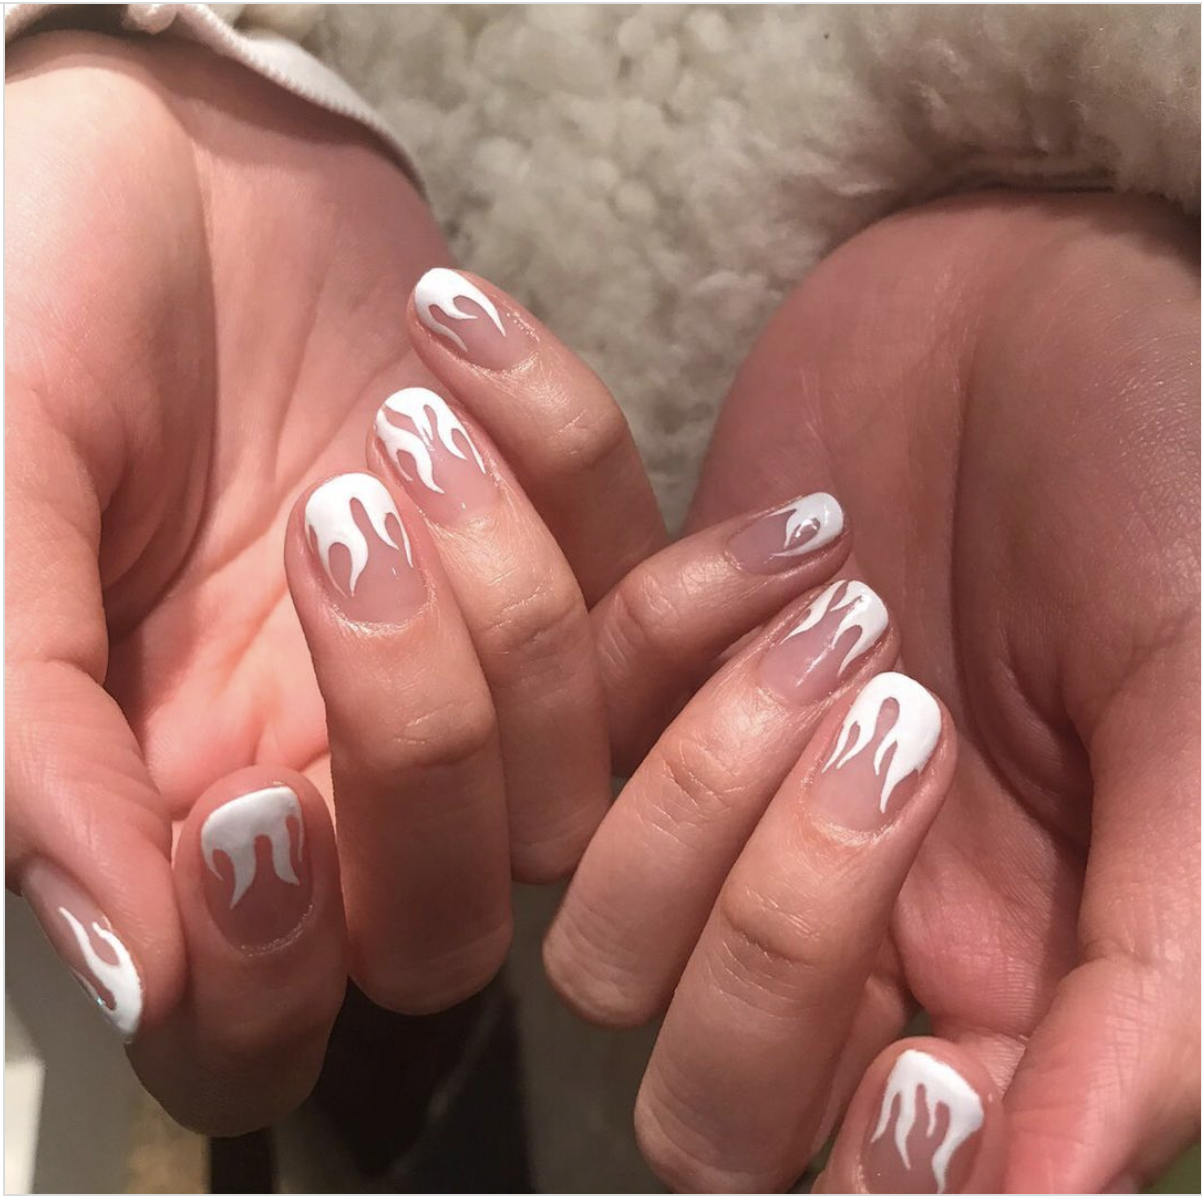 Tony's Nails - Short nails still cute! . . .Acrylic color Number #185 #187  Www.Designedbytonyly.com. . .Instagram @tonysnail @tonysnail @tonysnail # pretty #makeuptutorial #makeup #makeupartist #nails #nails💅 #california  #florida #texas #tutorial ...